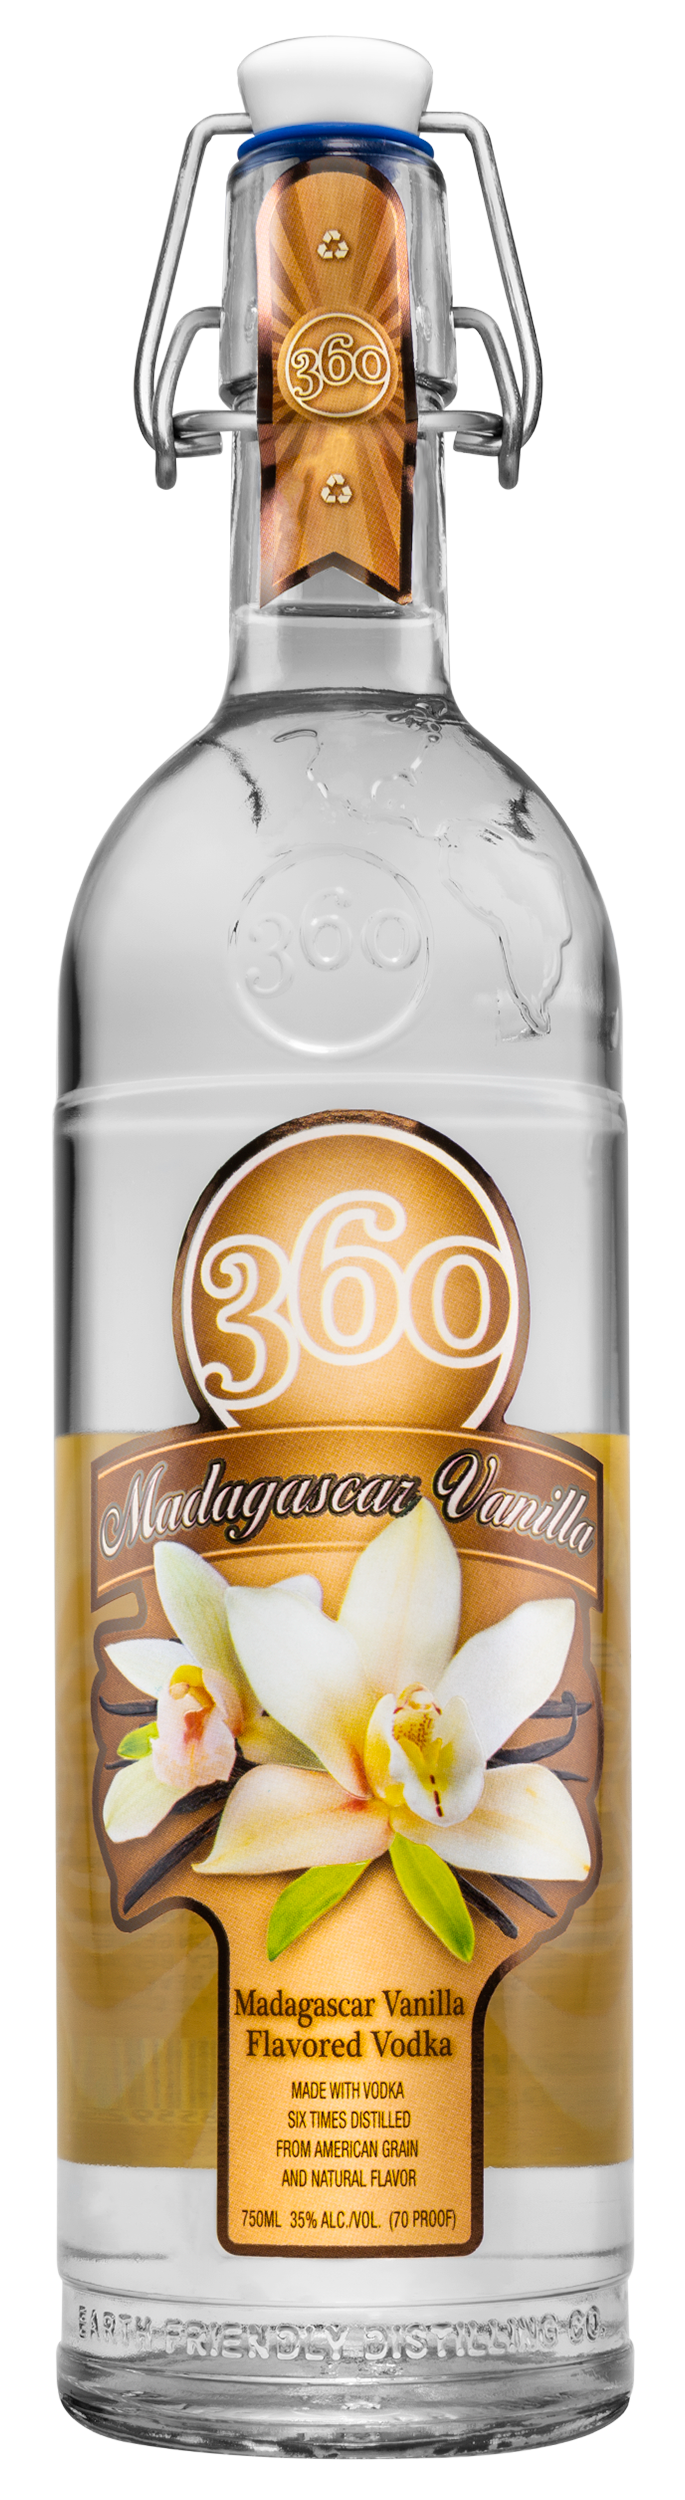 Flavored | Vodka Eco-Friendly Madagascar Vanilla Vodka 360 360